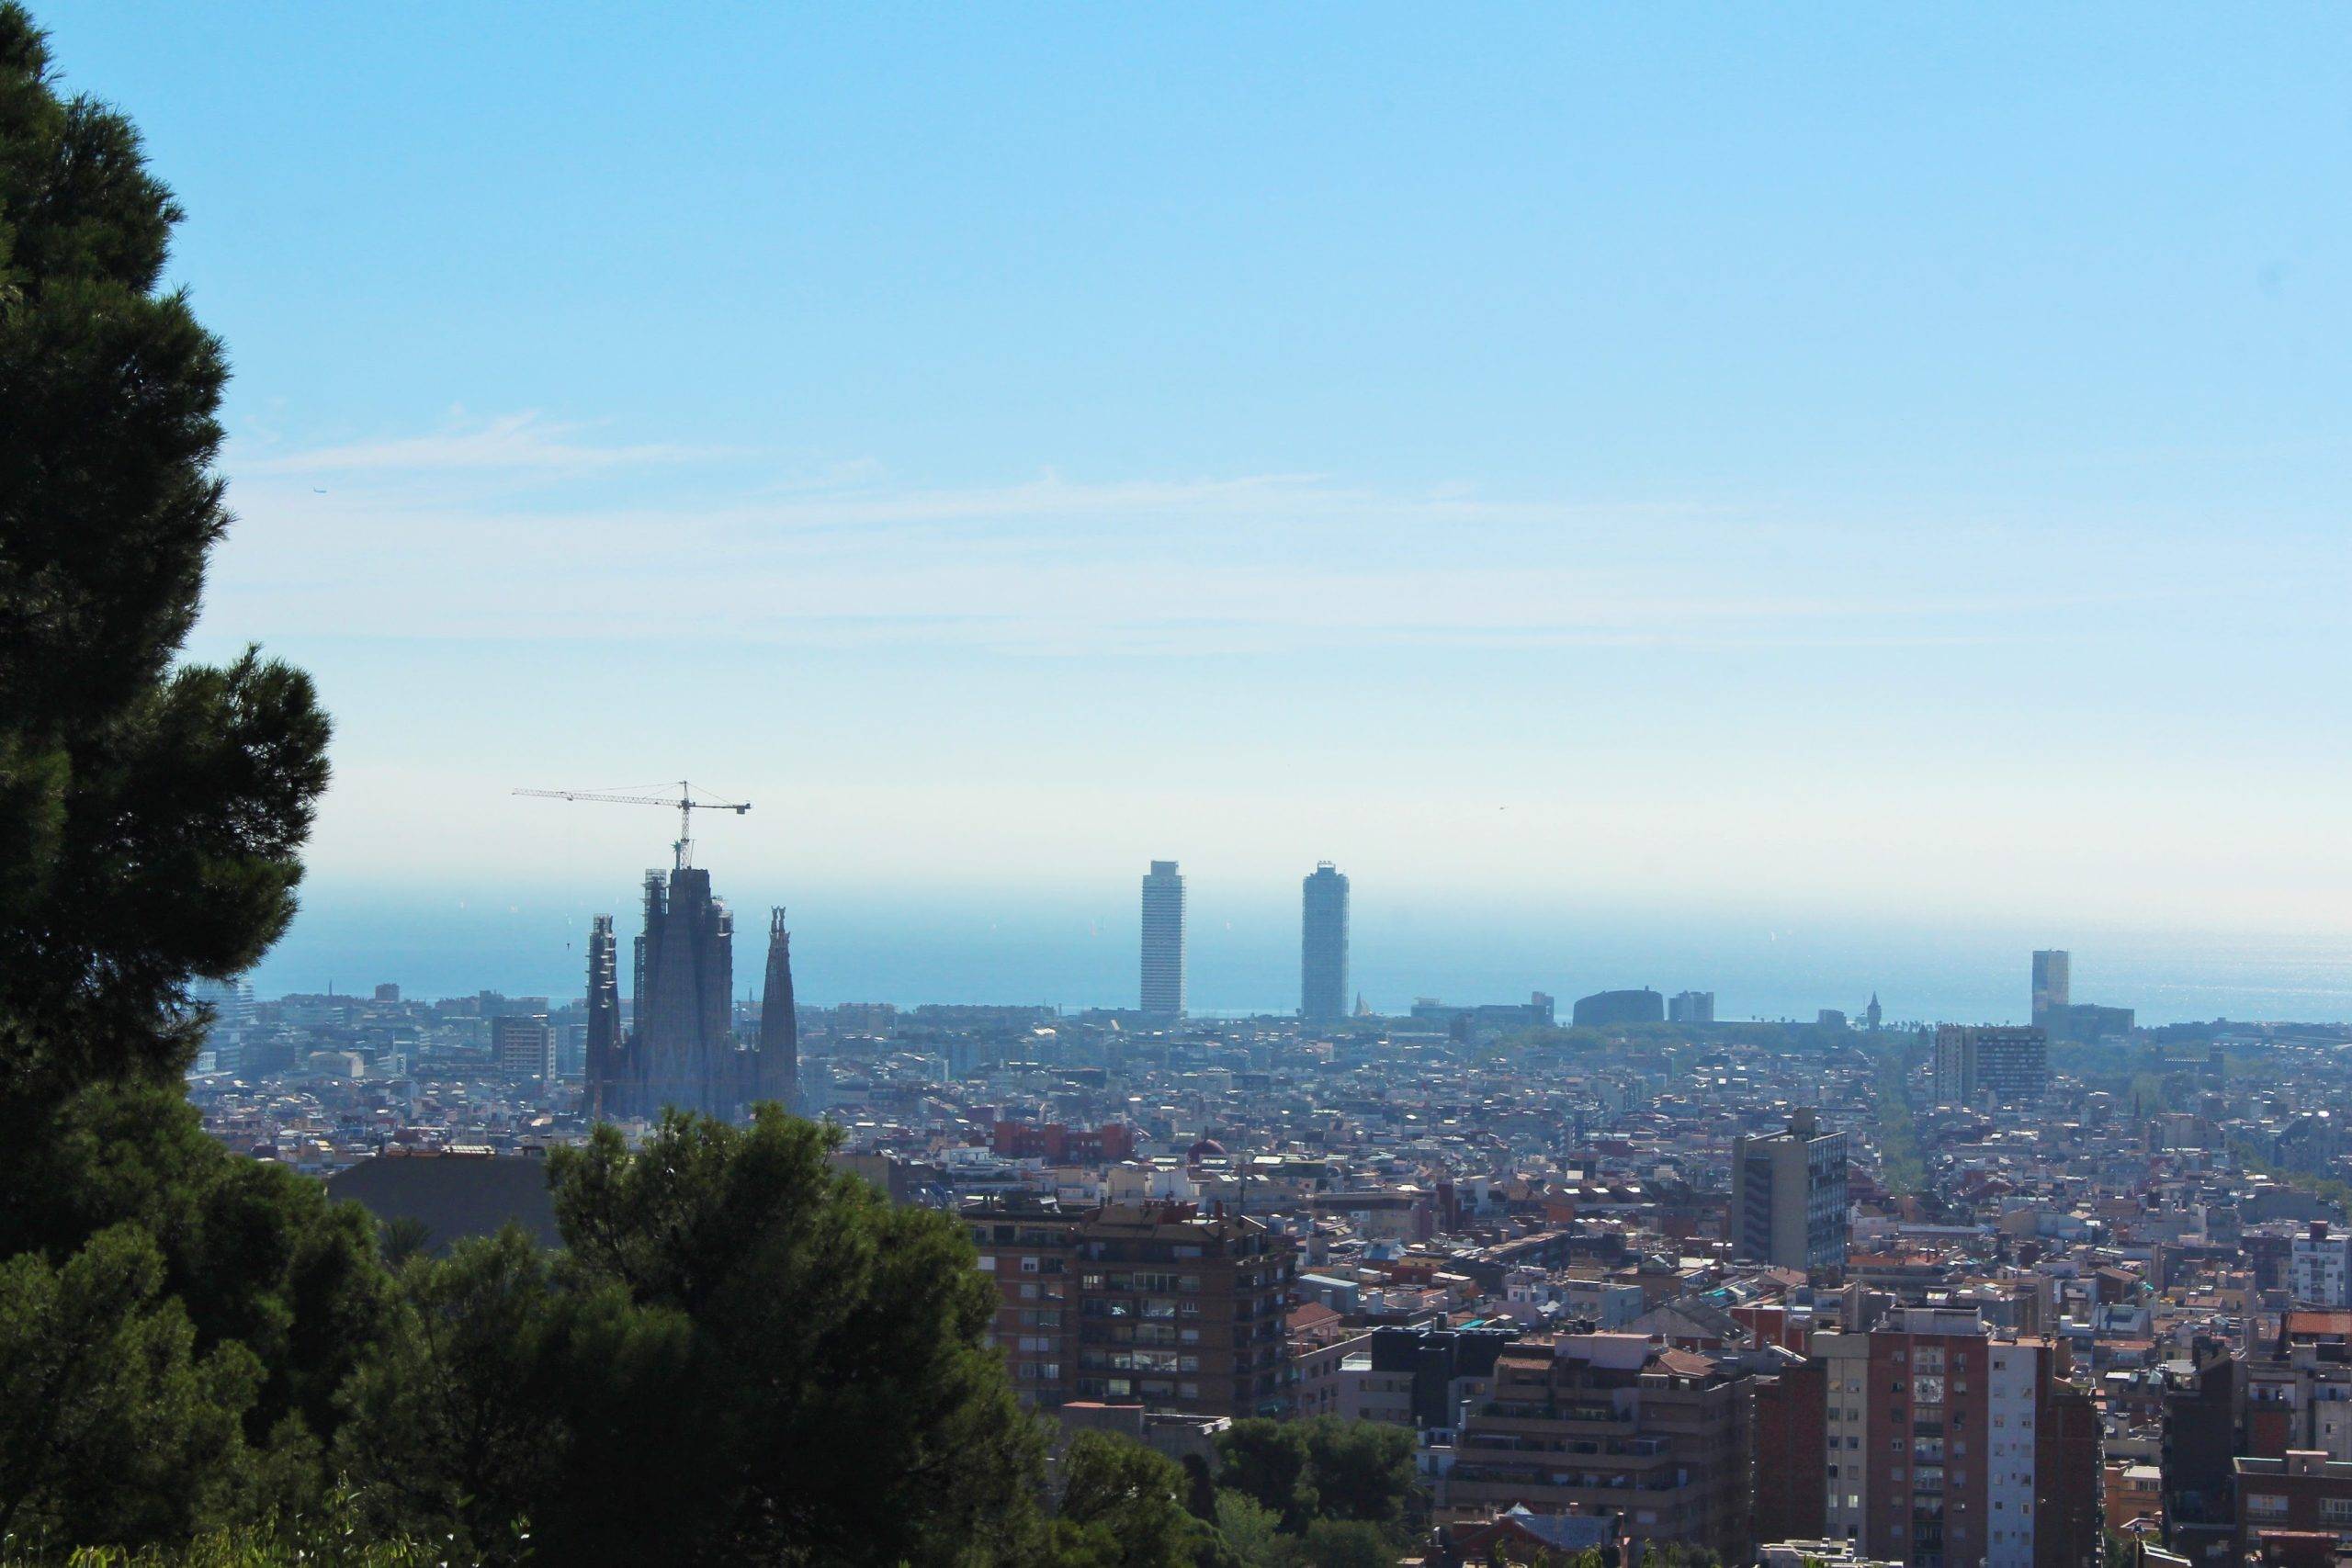 The Barcelona skyline with La Sagrada Familia and the sea in the distance